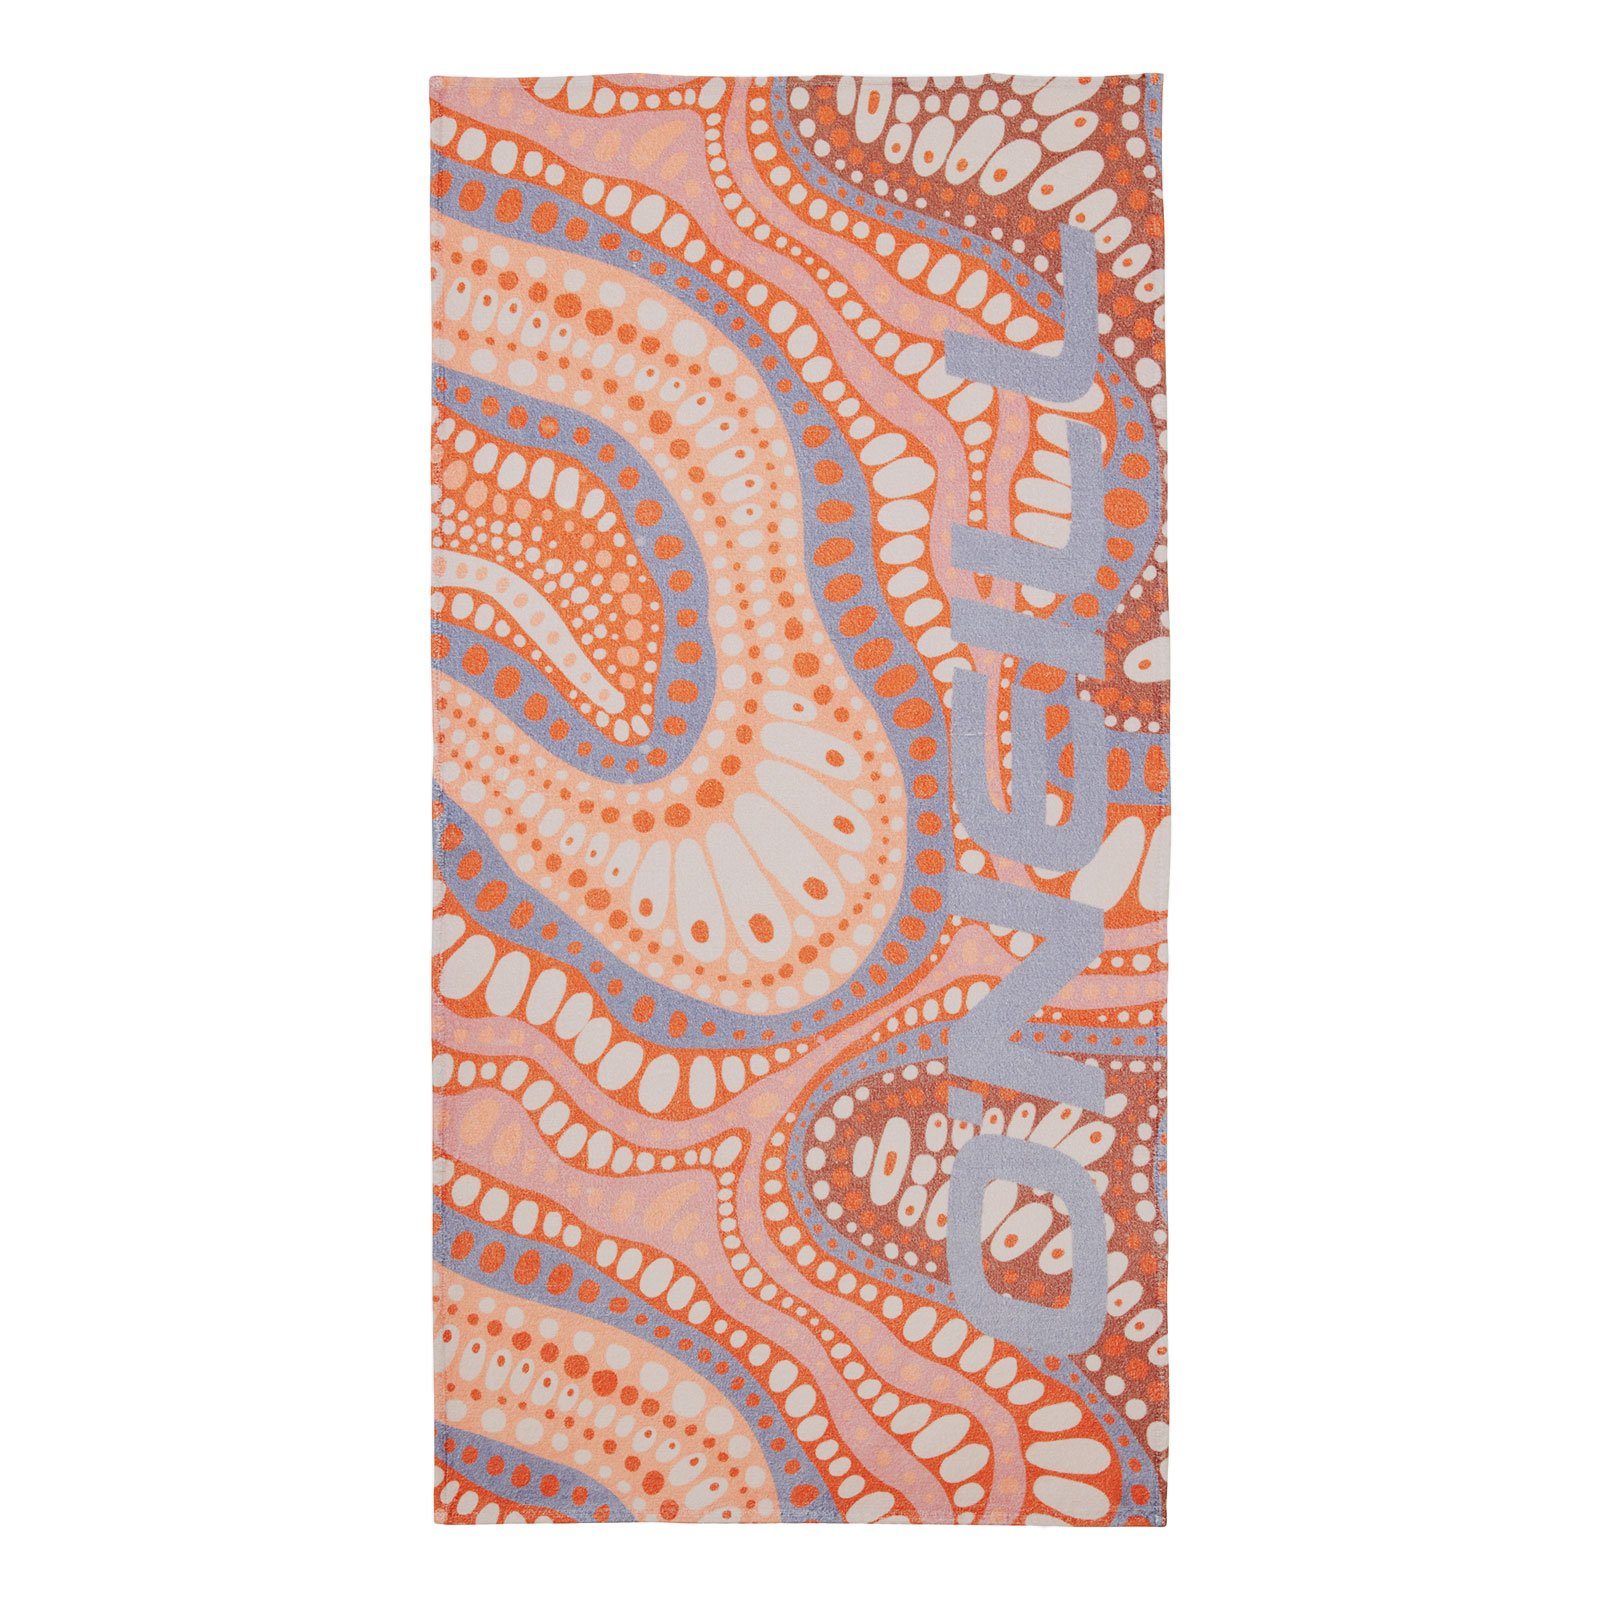 O'Neill Strandtuch Seacoast Towel, Baumwollfrottier (1-St), aus weichem Baumwollfrottier 37516 dotted print